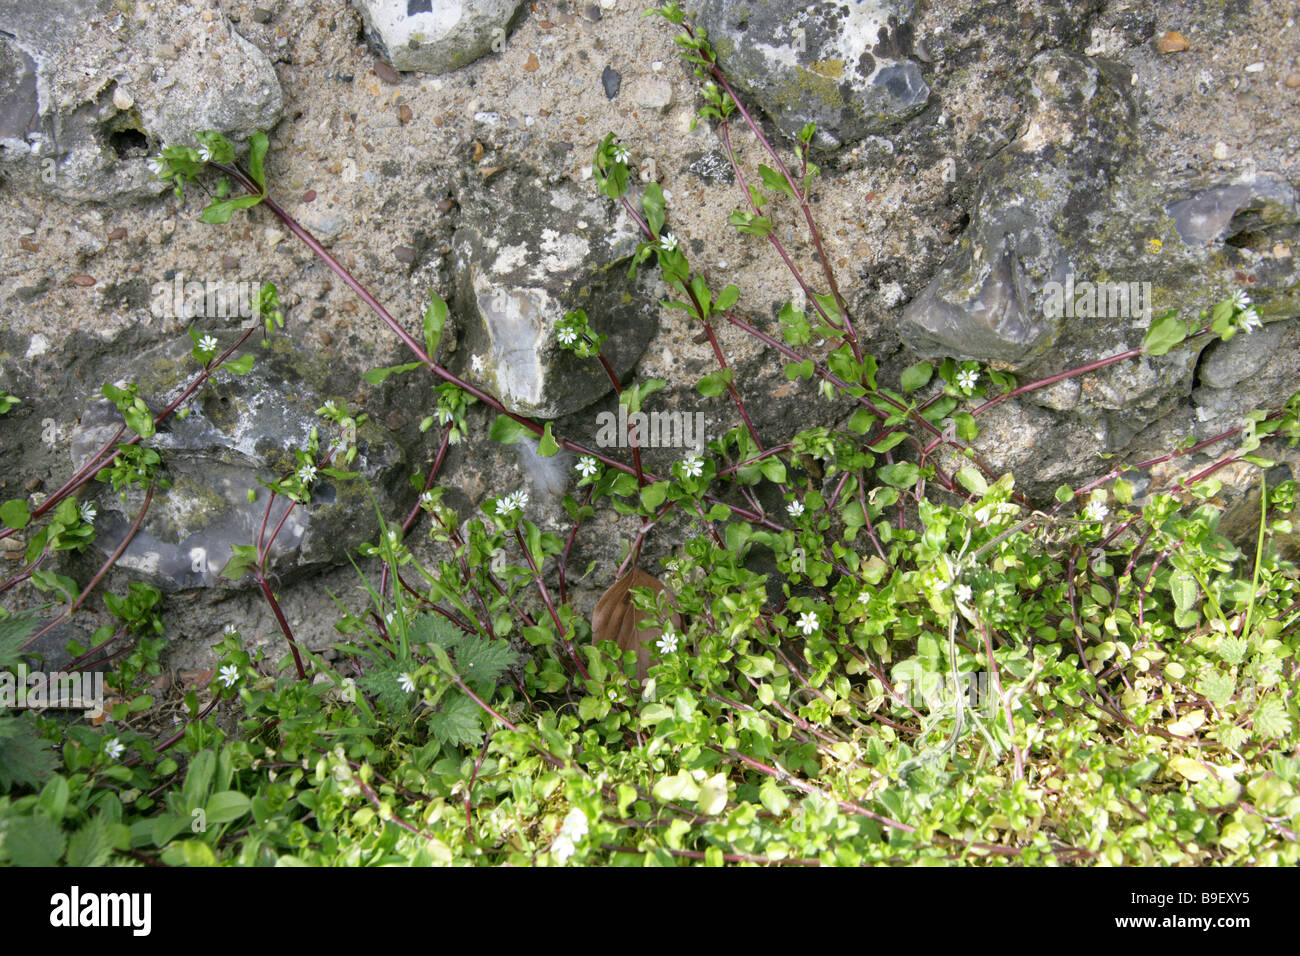 Thyme Leaved Sandwort, Arenaria serpyllifolia, Caryophyllaceae Stock Photo